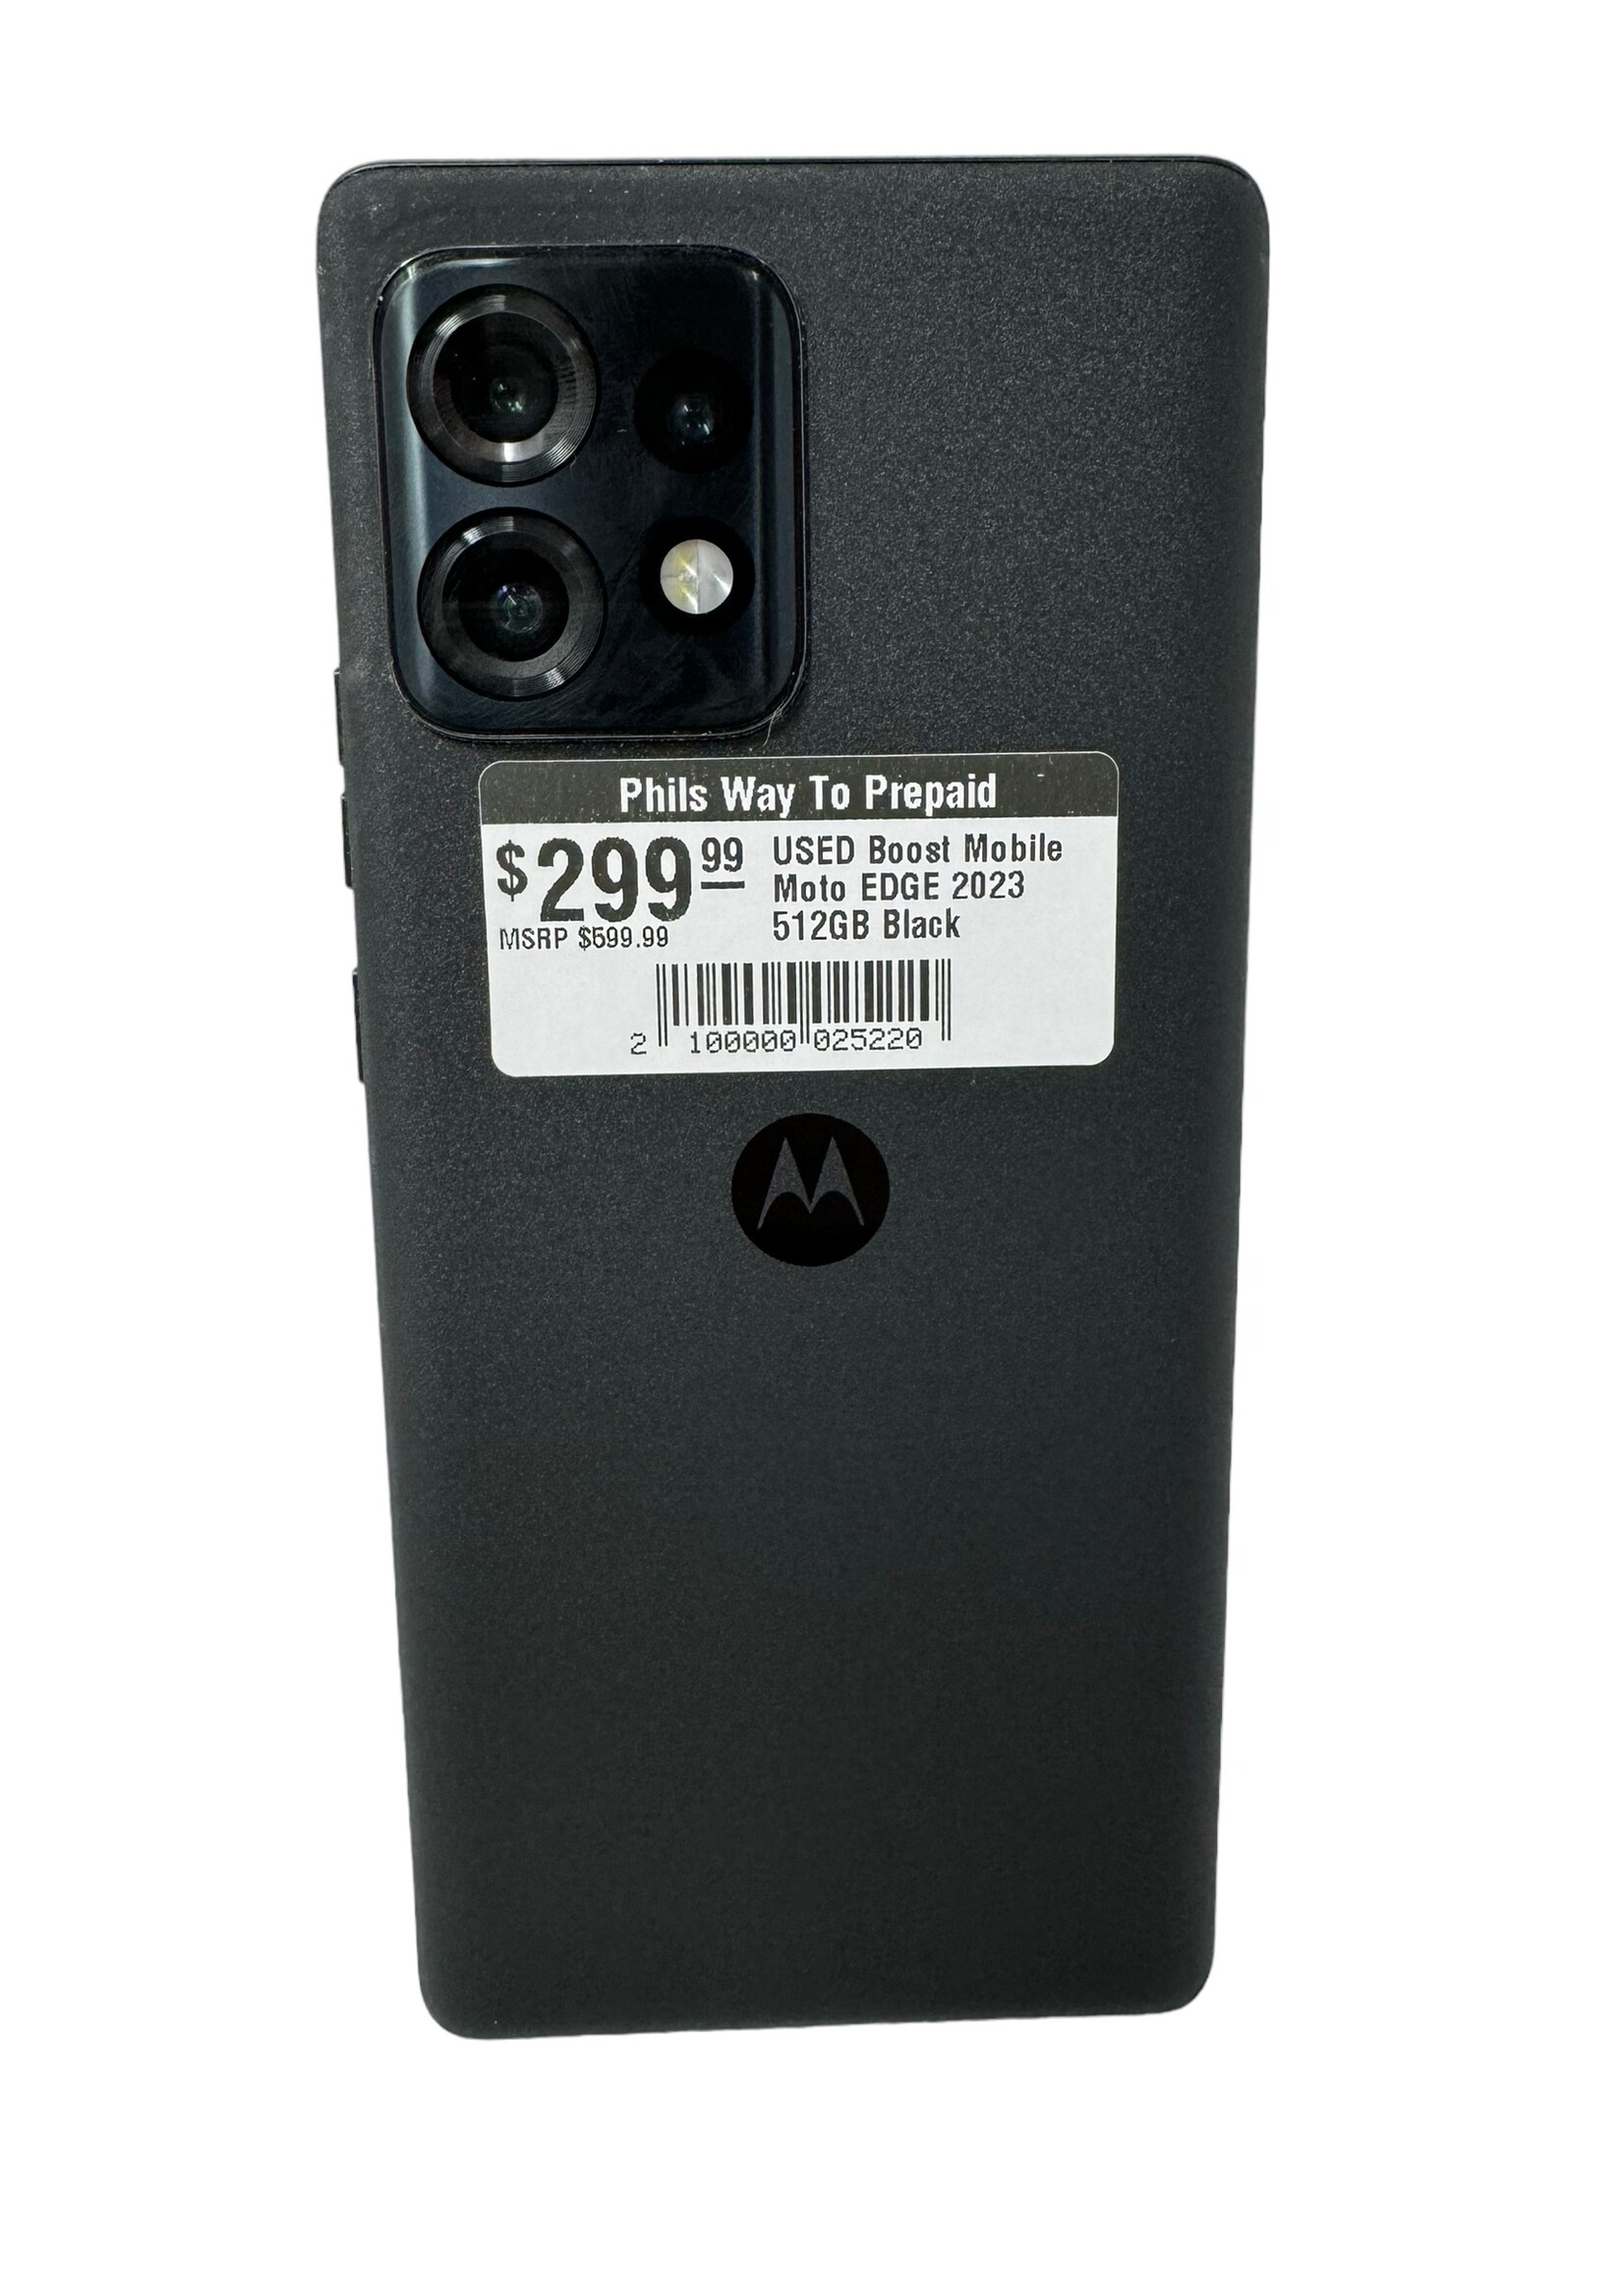 Motorola USED Boost Mobile Moto EDGE 2023 512GB Black